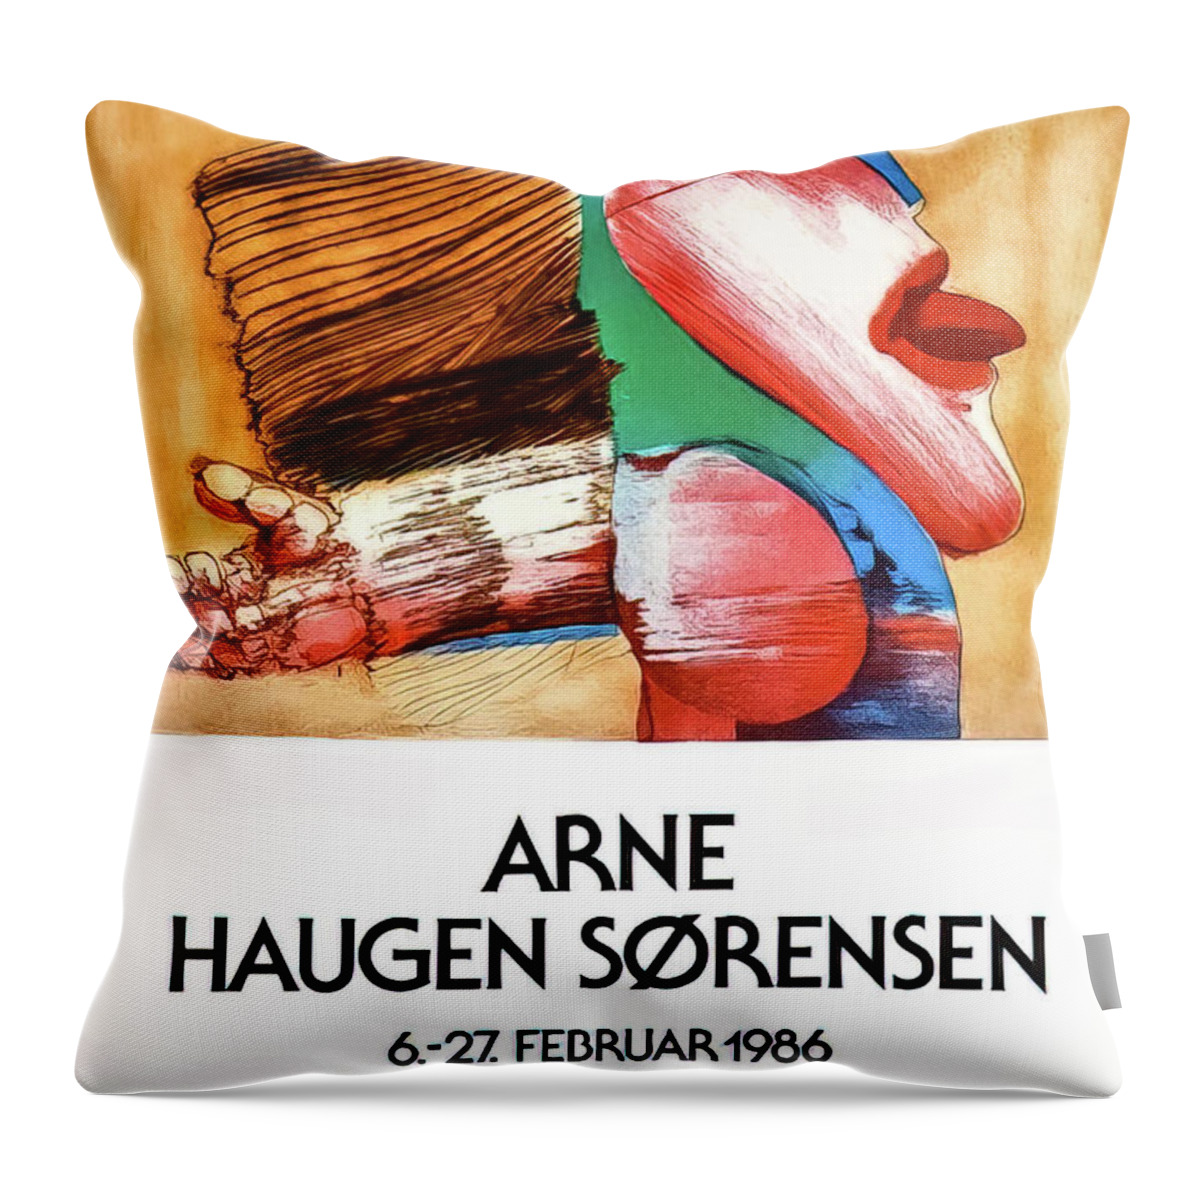 Copenhagen Throw Pillow featuring the drawing Arne Haugen Sornsen Art Exhibition Poster Copenhagen 1986 by M G Whittingham